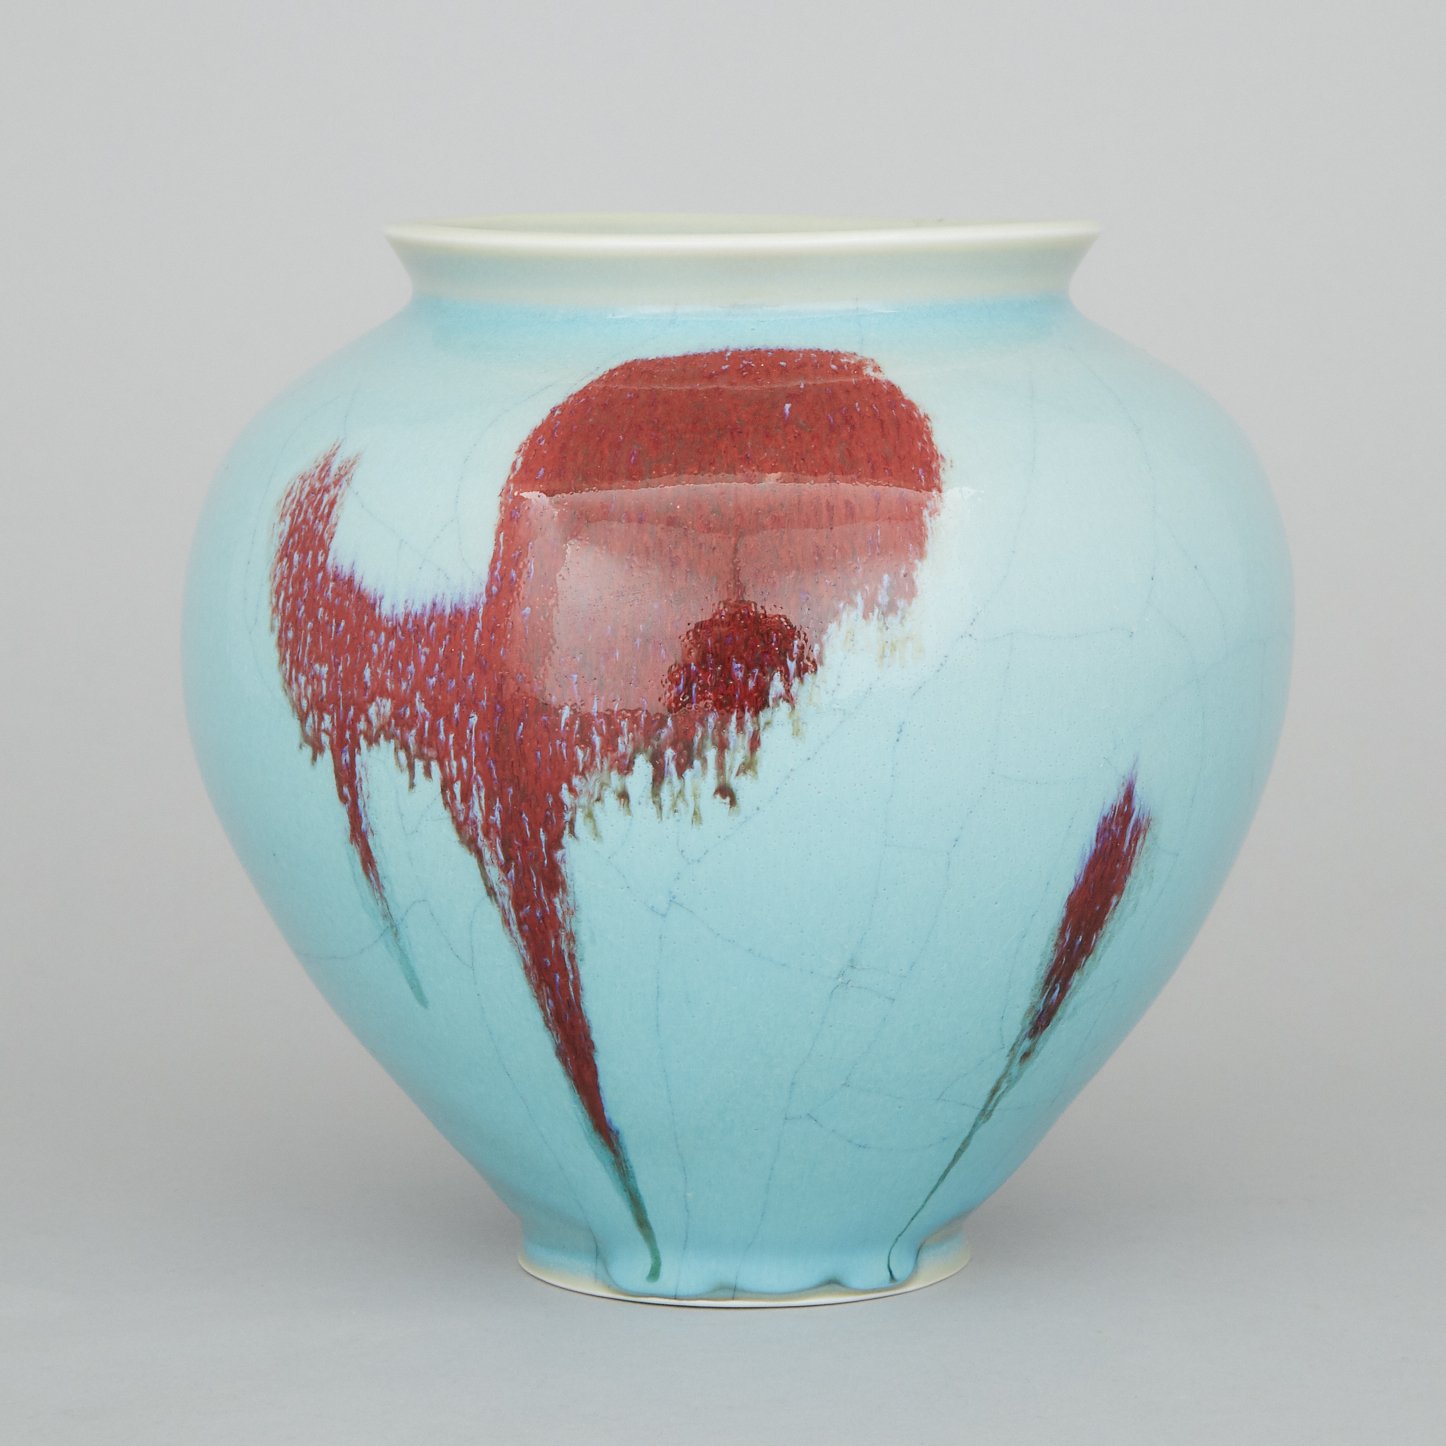 Harlan House (Canadian, b.1943), Celadon and Oxblood Glazed Vase, 1992